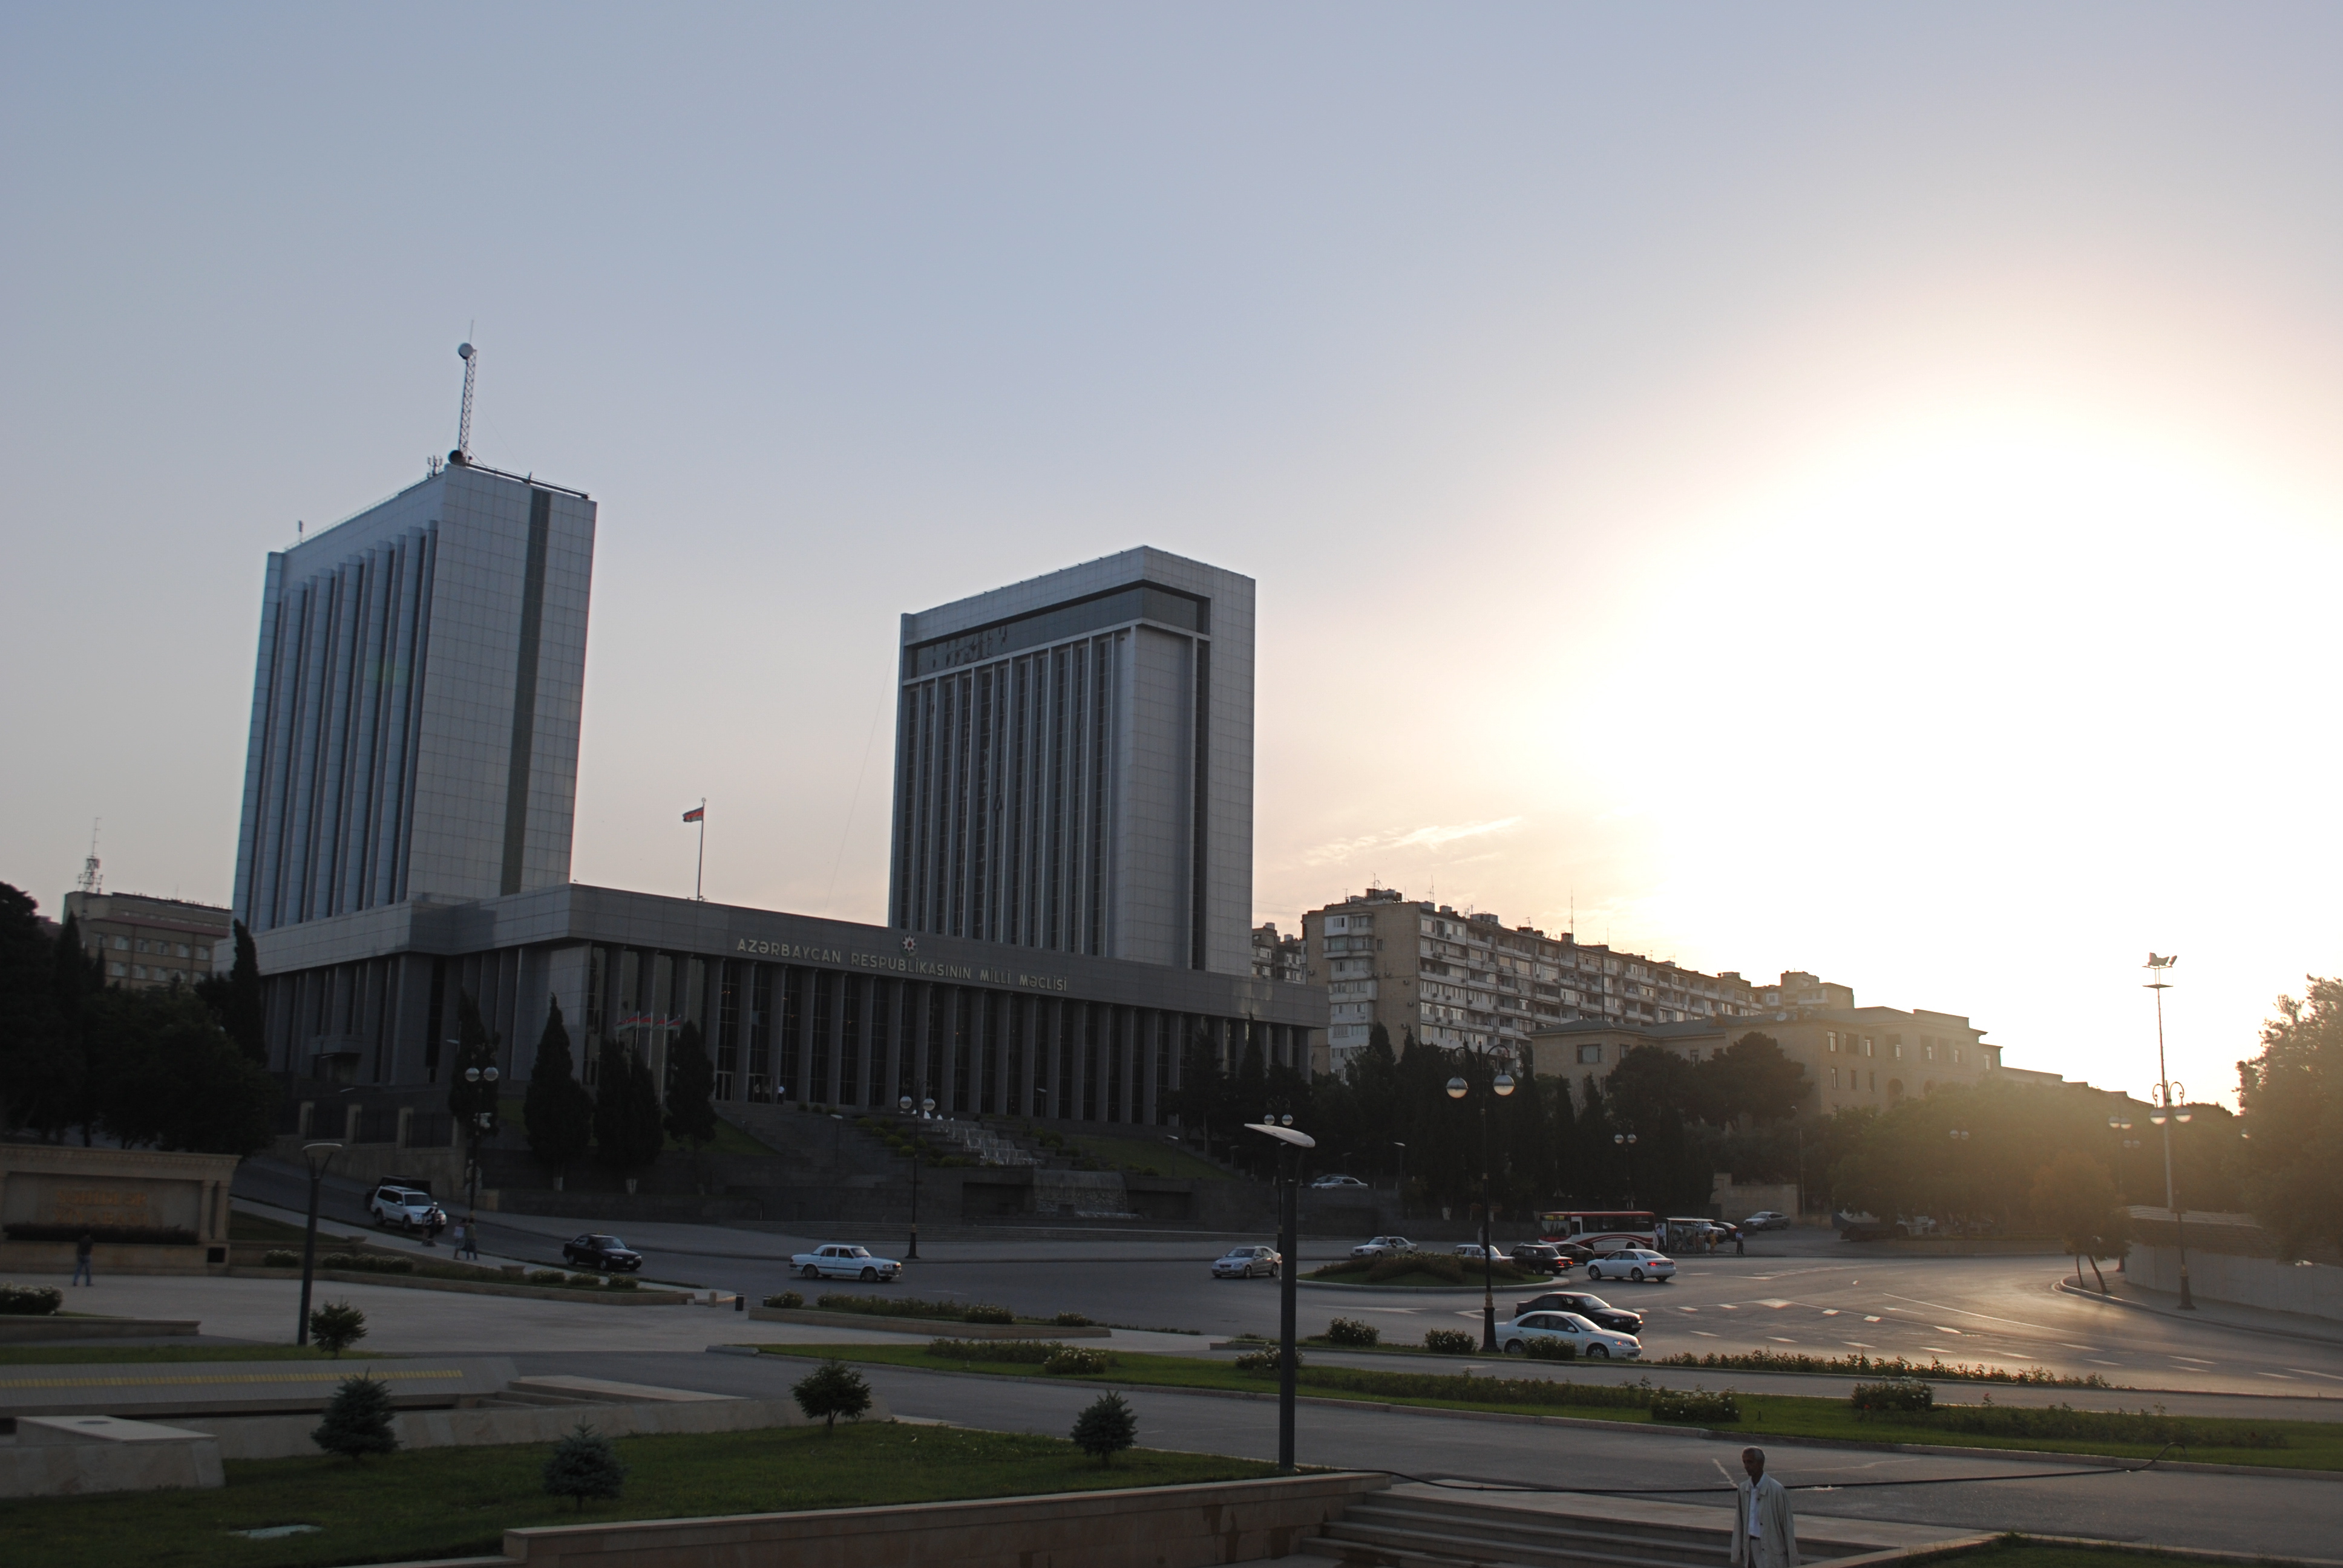 Milli Majlis building, Azerbaijan (photo credit: Salvatore/flickr)